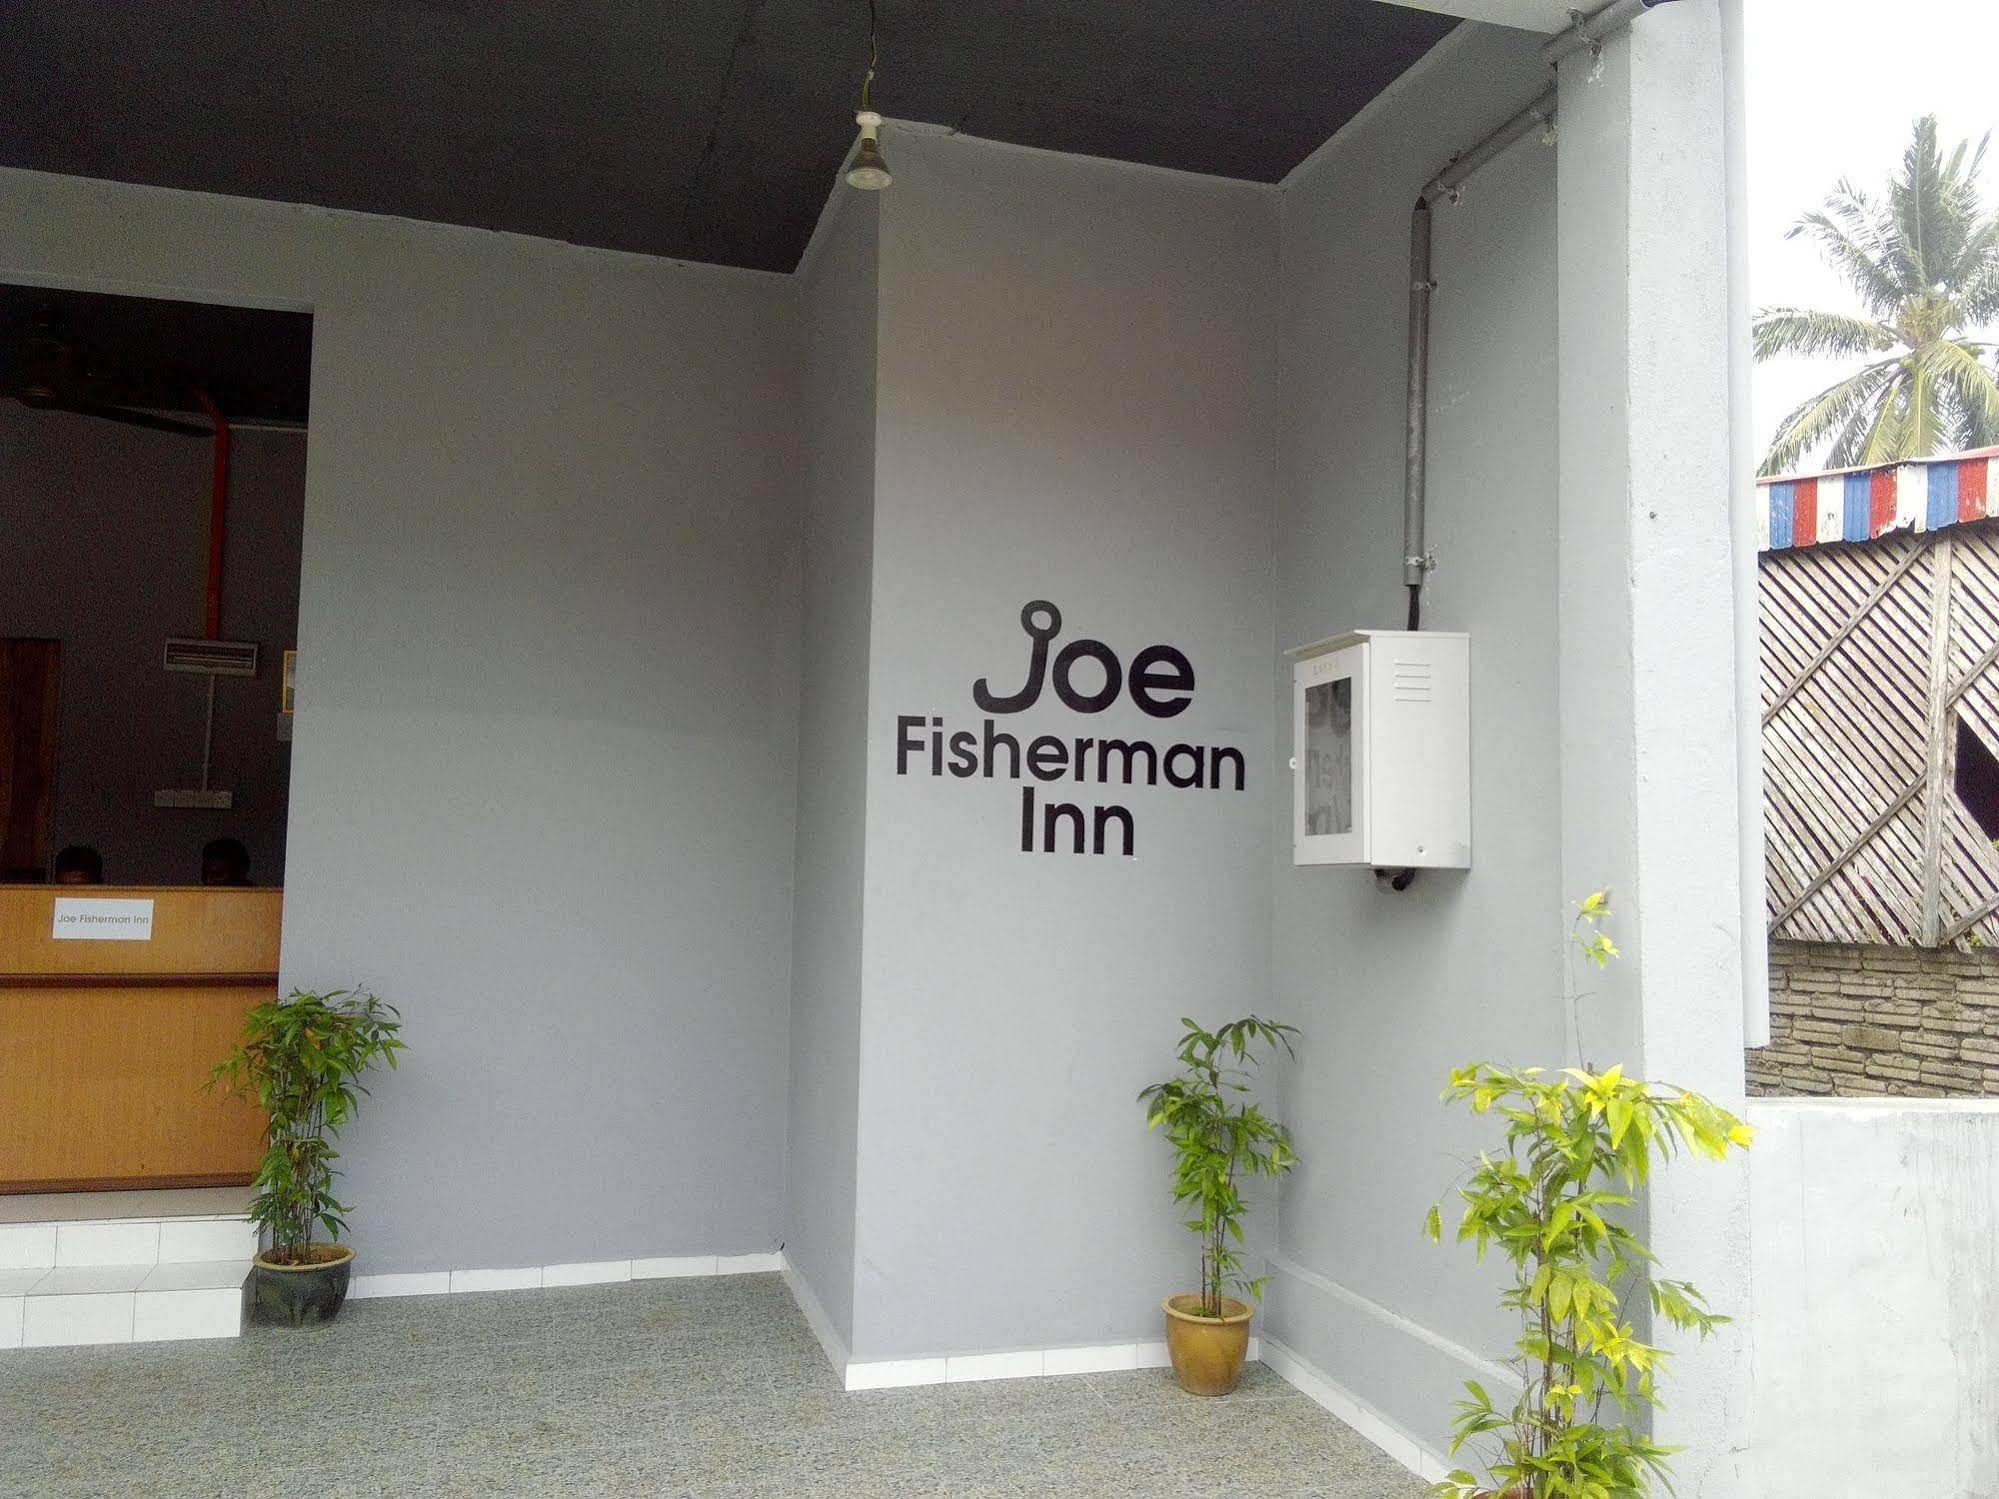 Joe Fisherman Inn